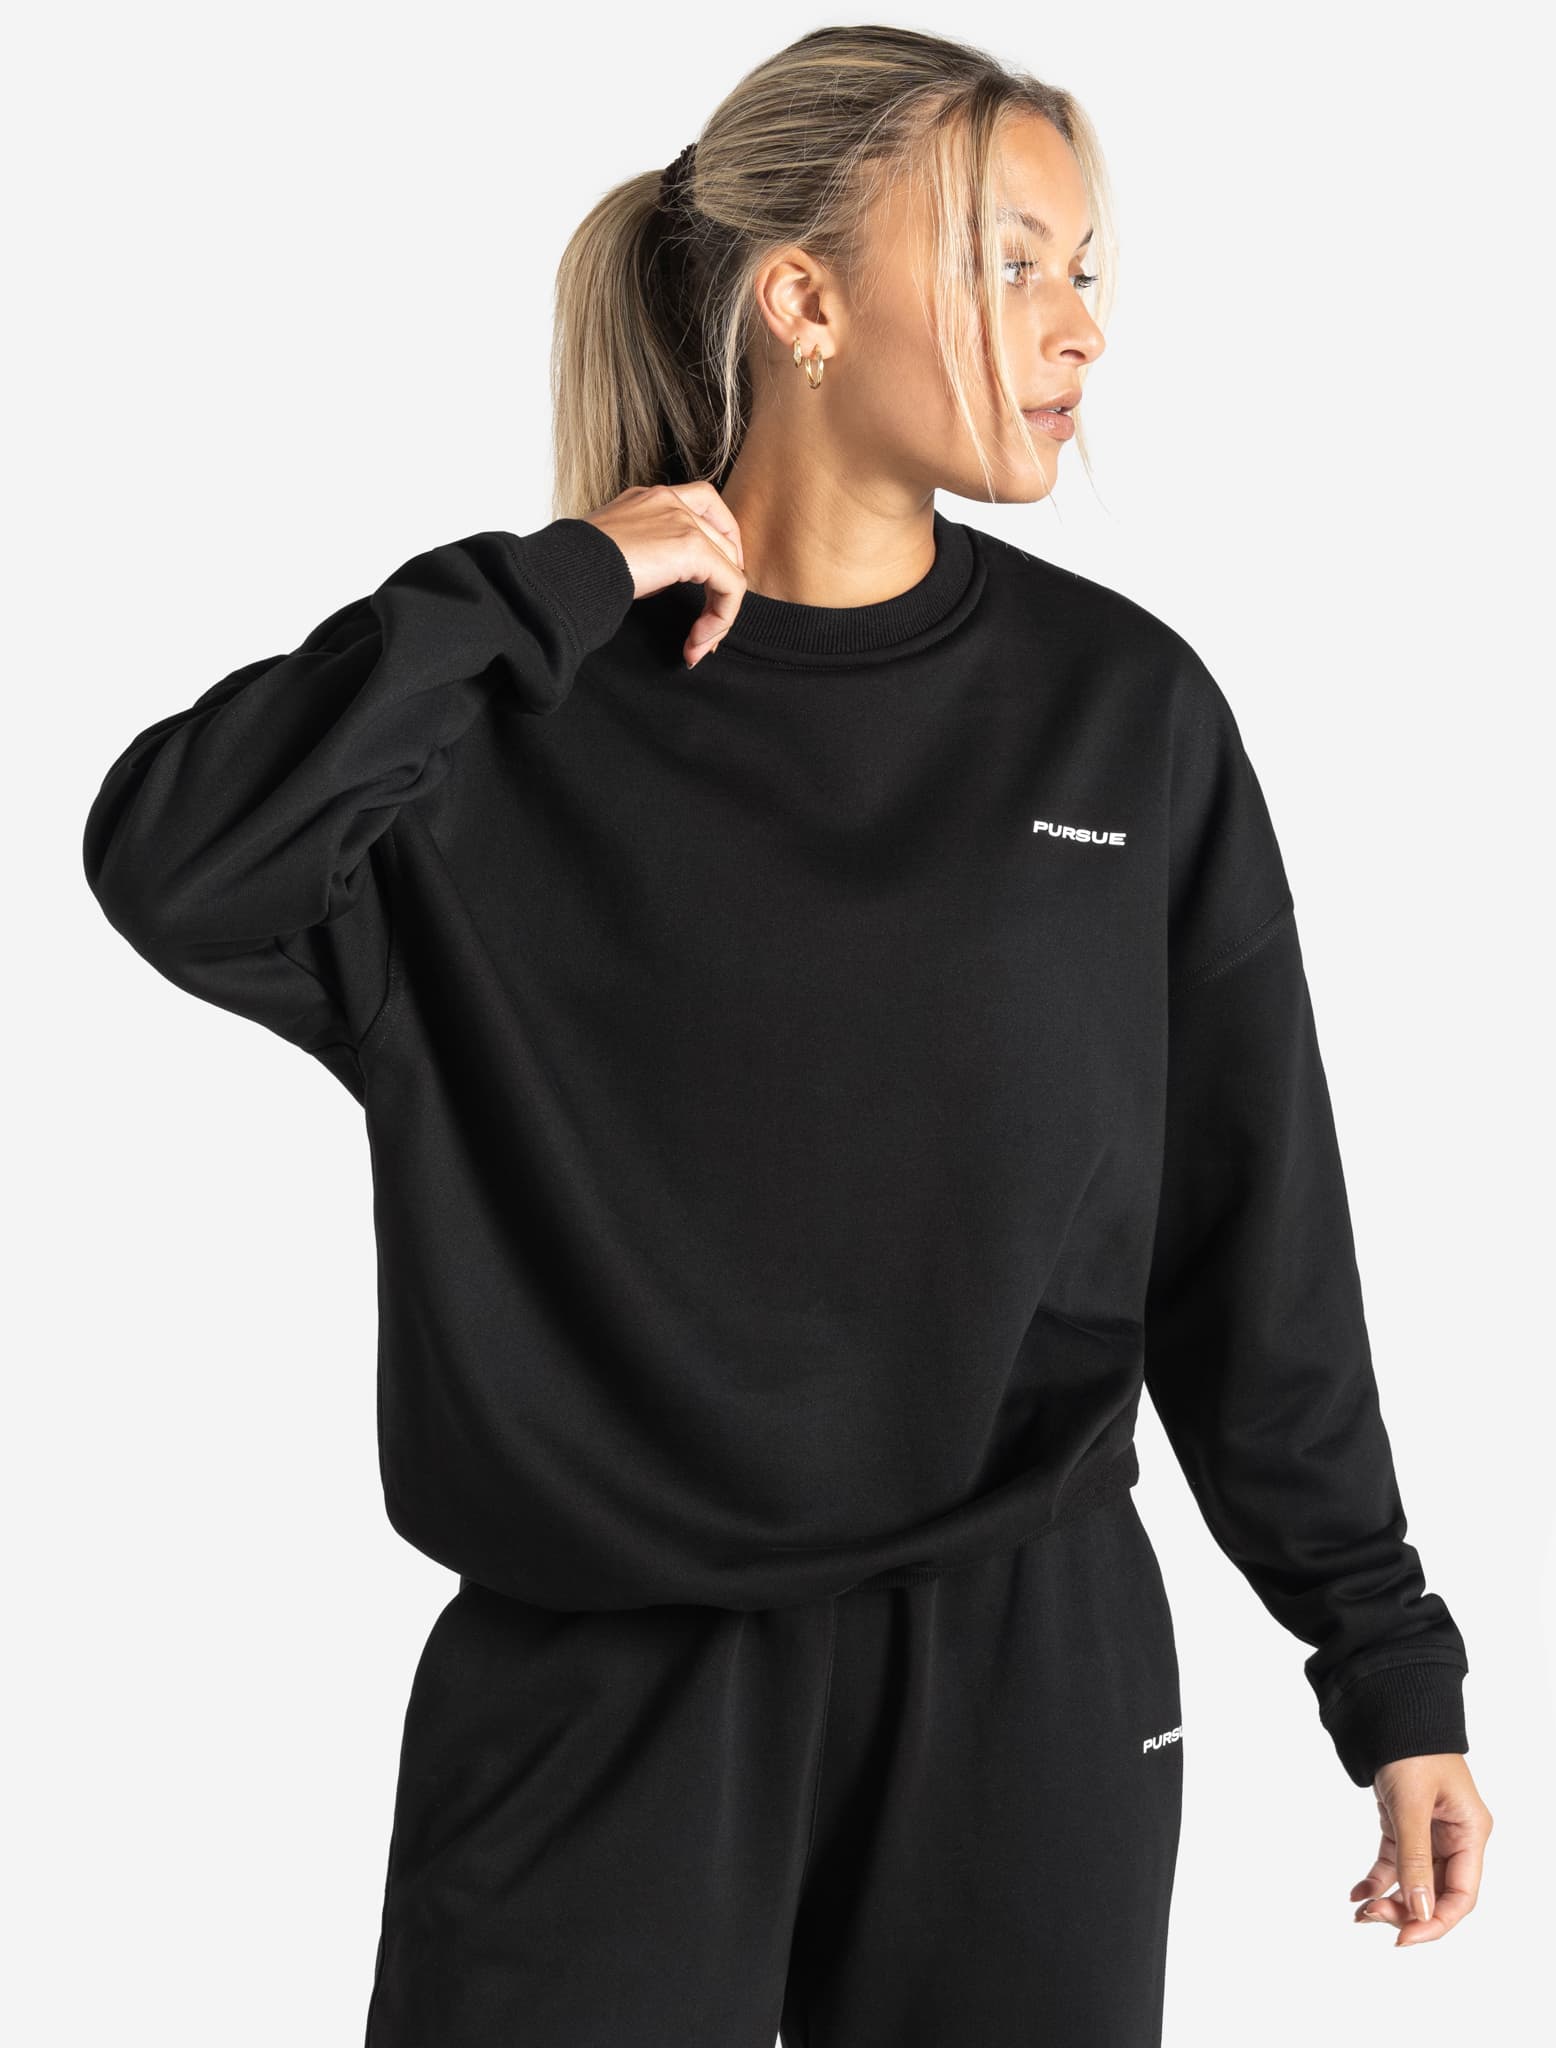 Oversized Sweatshirt / Black Pursue Fitness 2